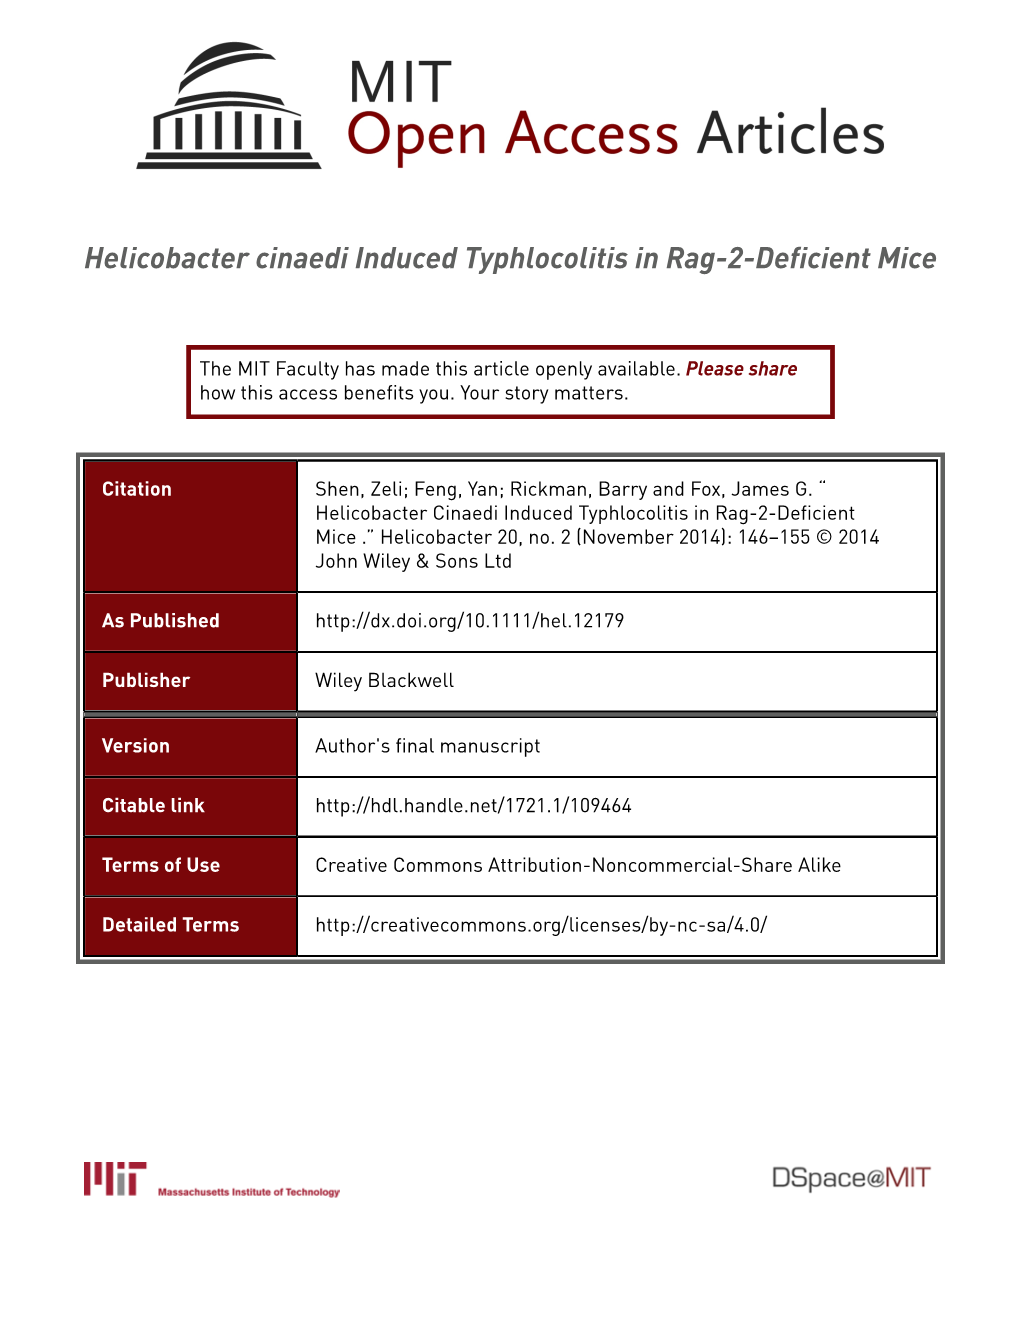 Helicobacter Cinaedi Induced Typhlocolitis in Rag-2-Deficient Mice